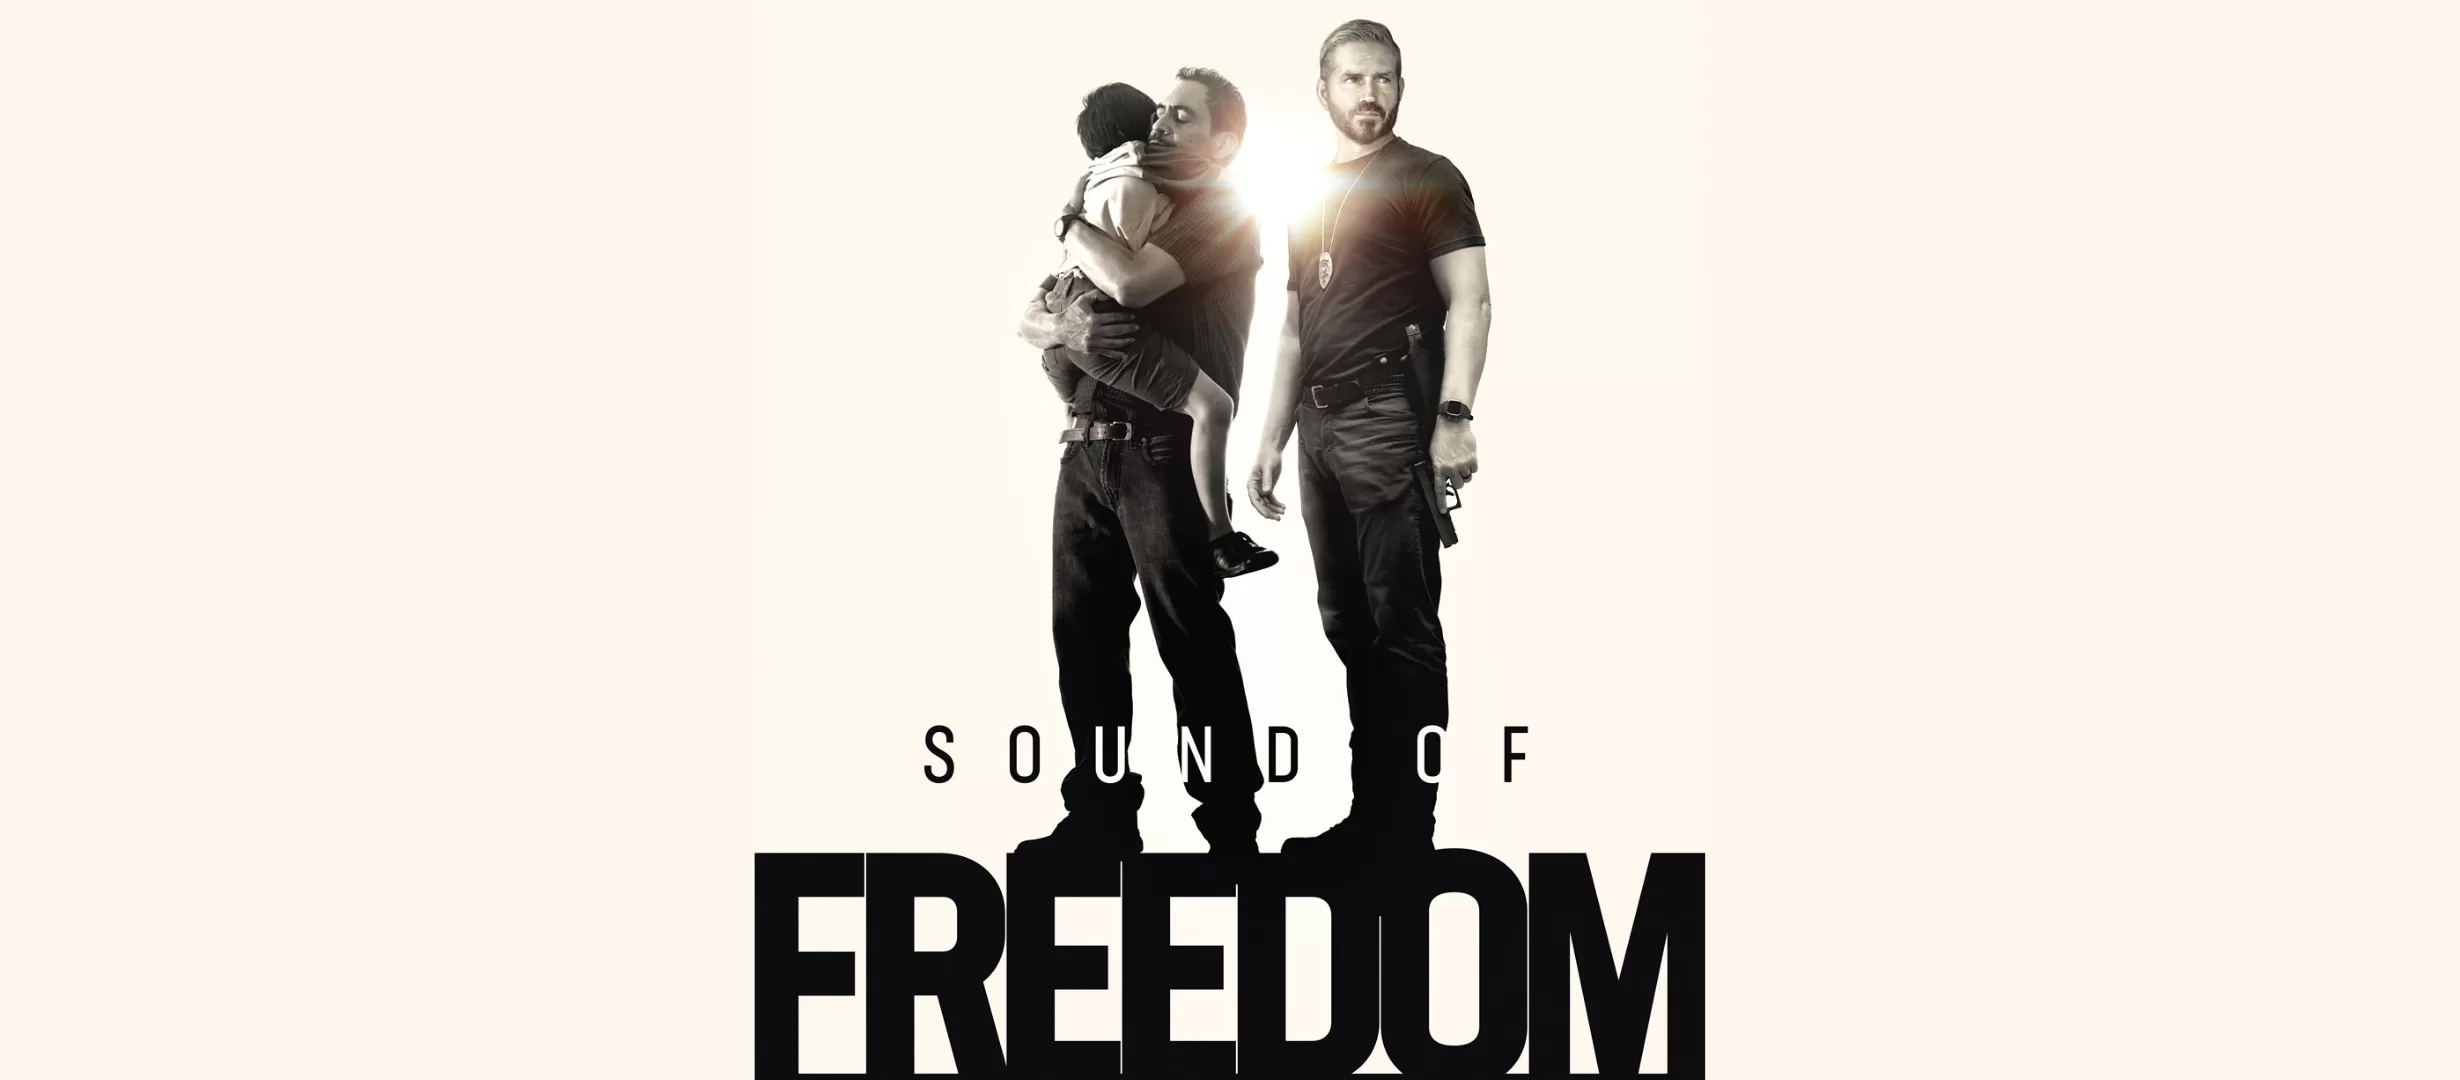 U.S. Trafficking Survivor Responds to the Sound of Freedom Movie #godschildrennotforsale